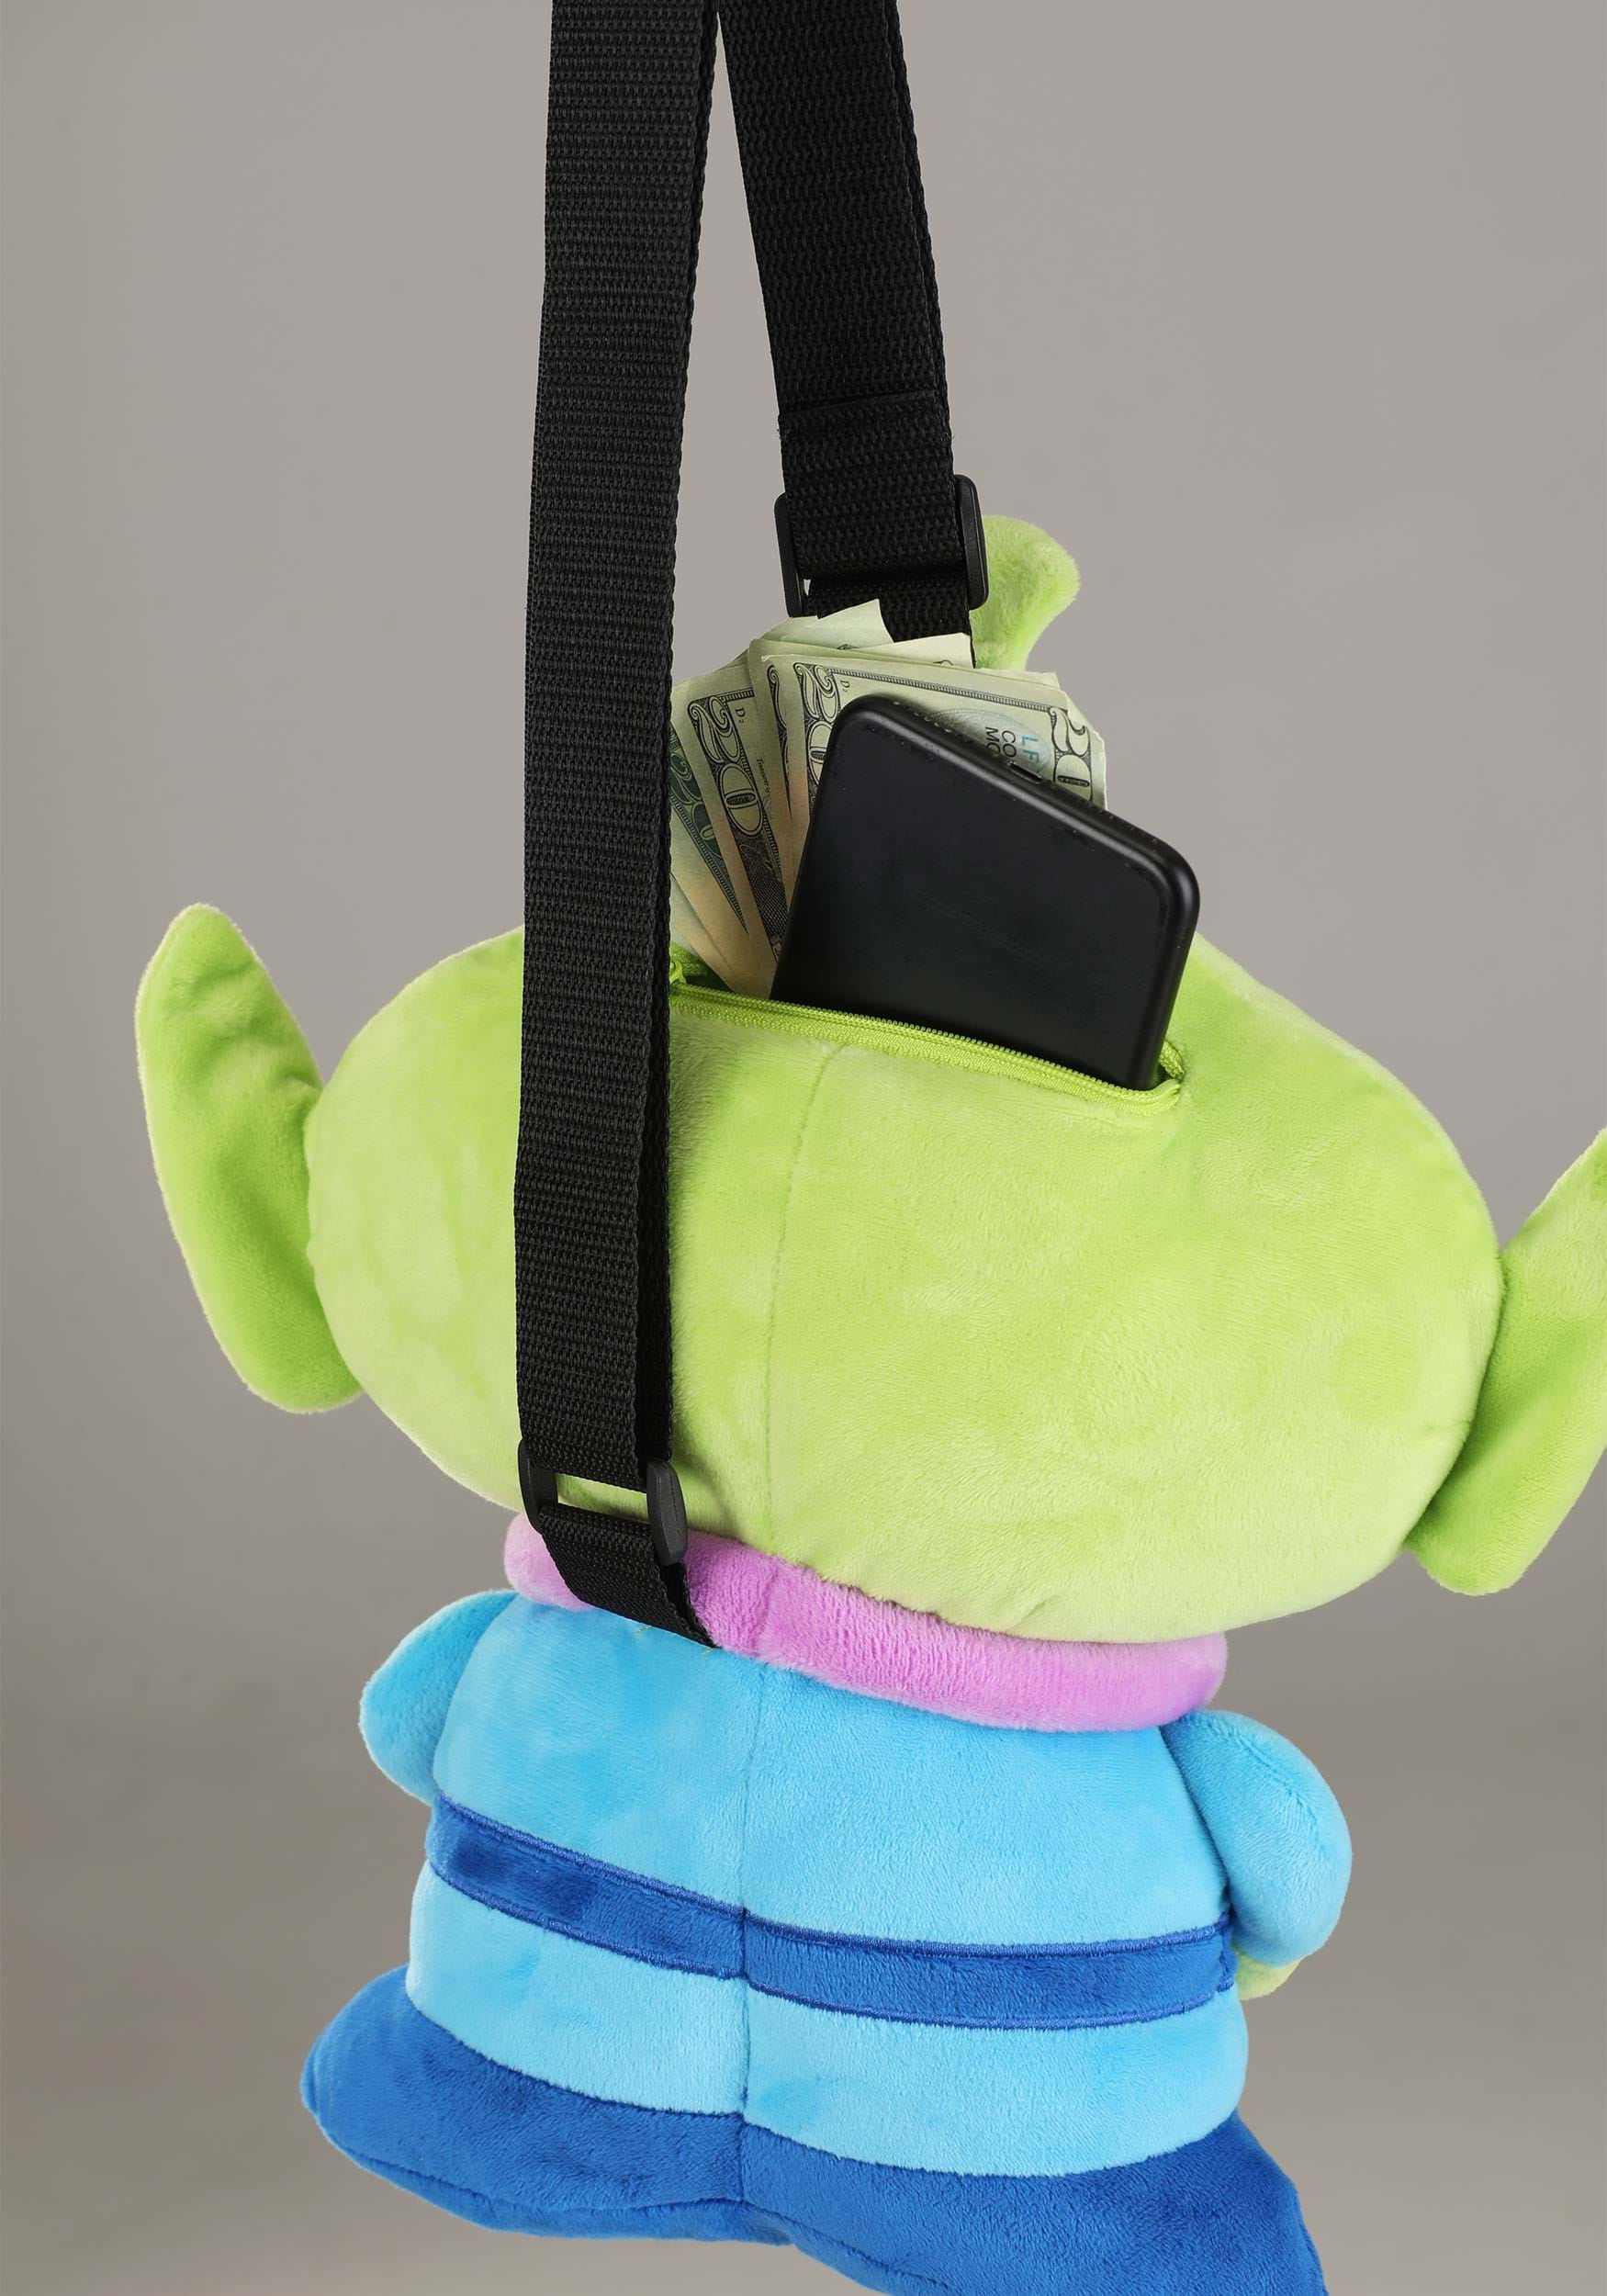 Harvey's Seatbelt Toy Story Alien Disney Pixar Fold Over Bag | eBay